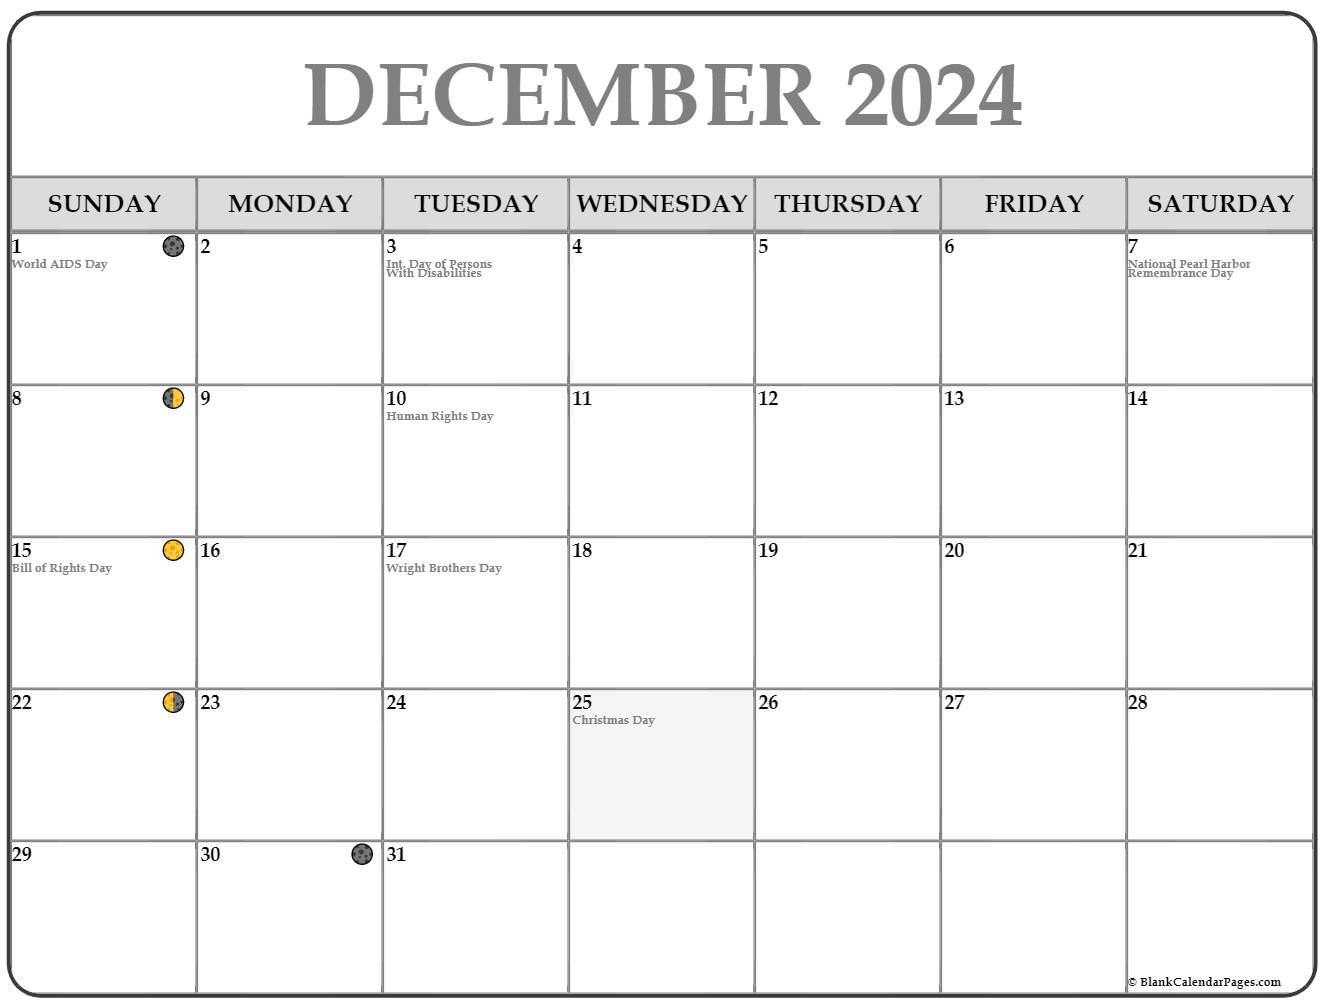 December 2024 Lunar Calendar | Moon Phase Calendar